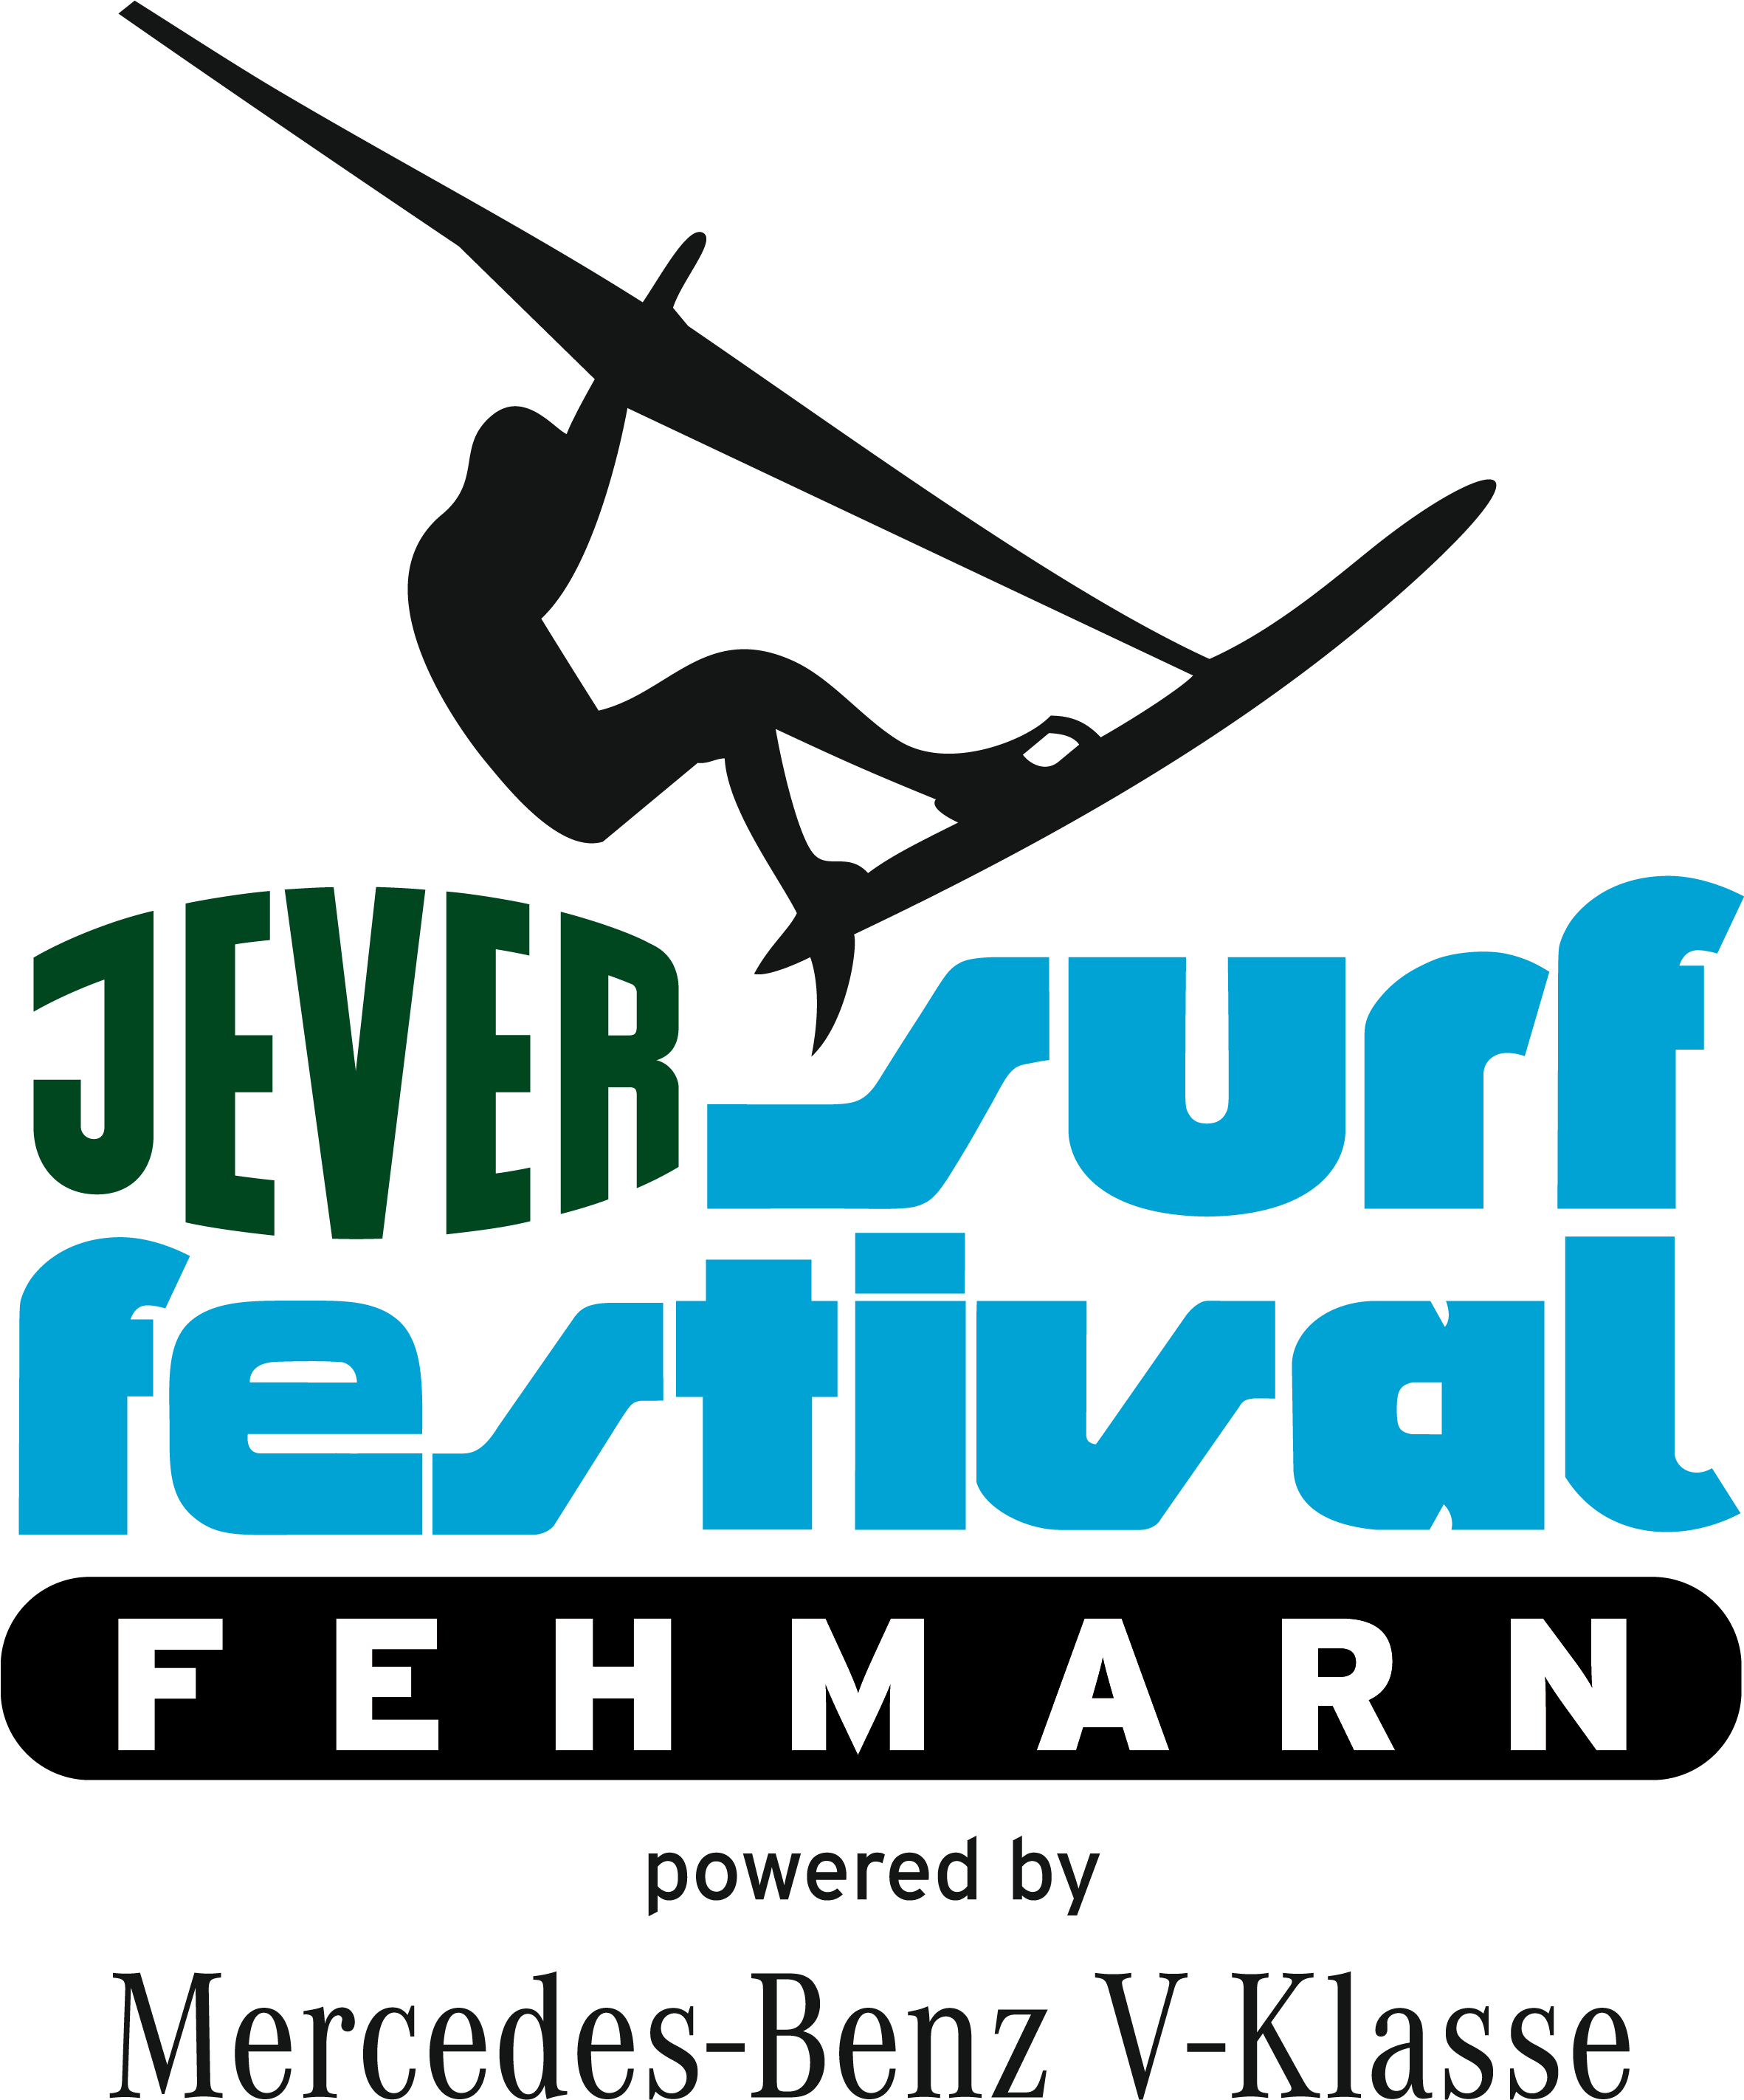 Jever Surf Festival Fehmarn Logo PNG image